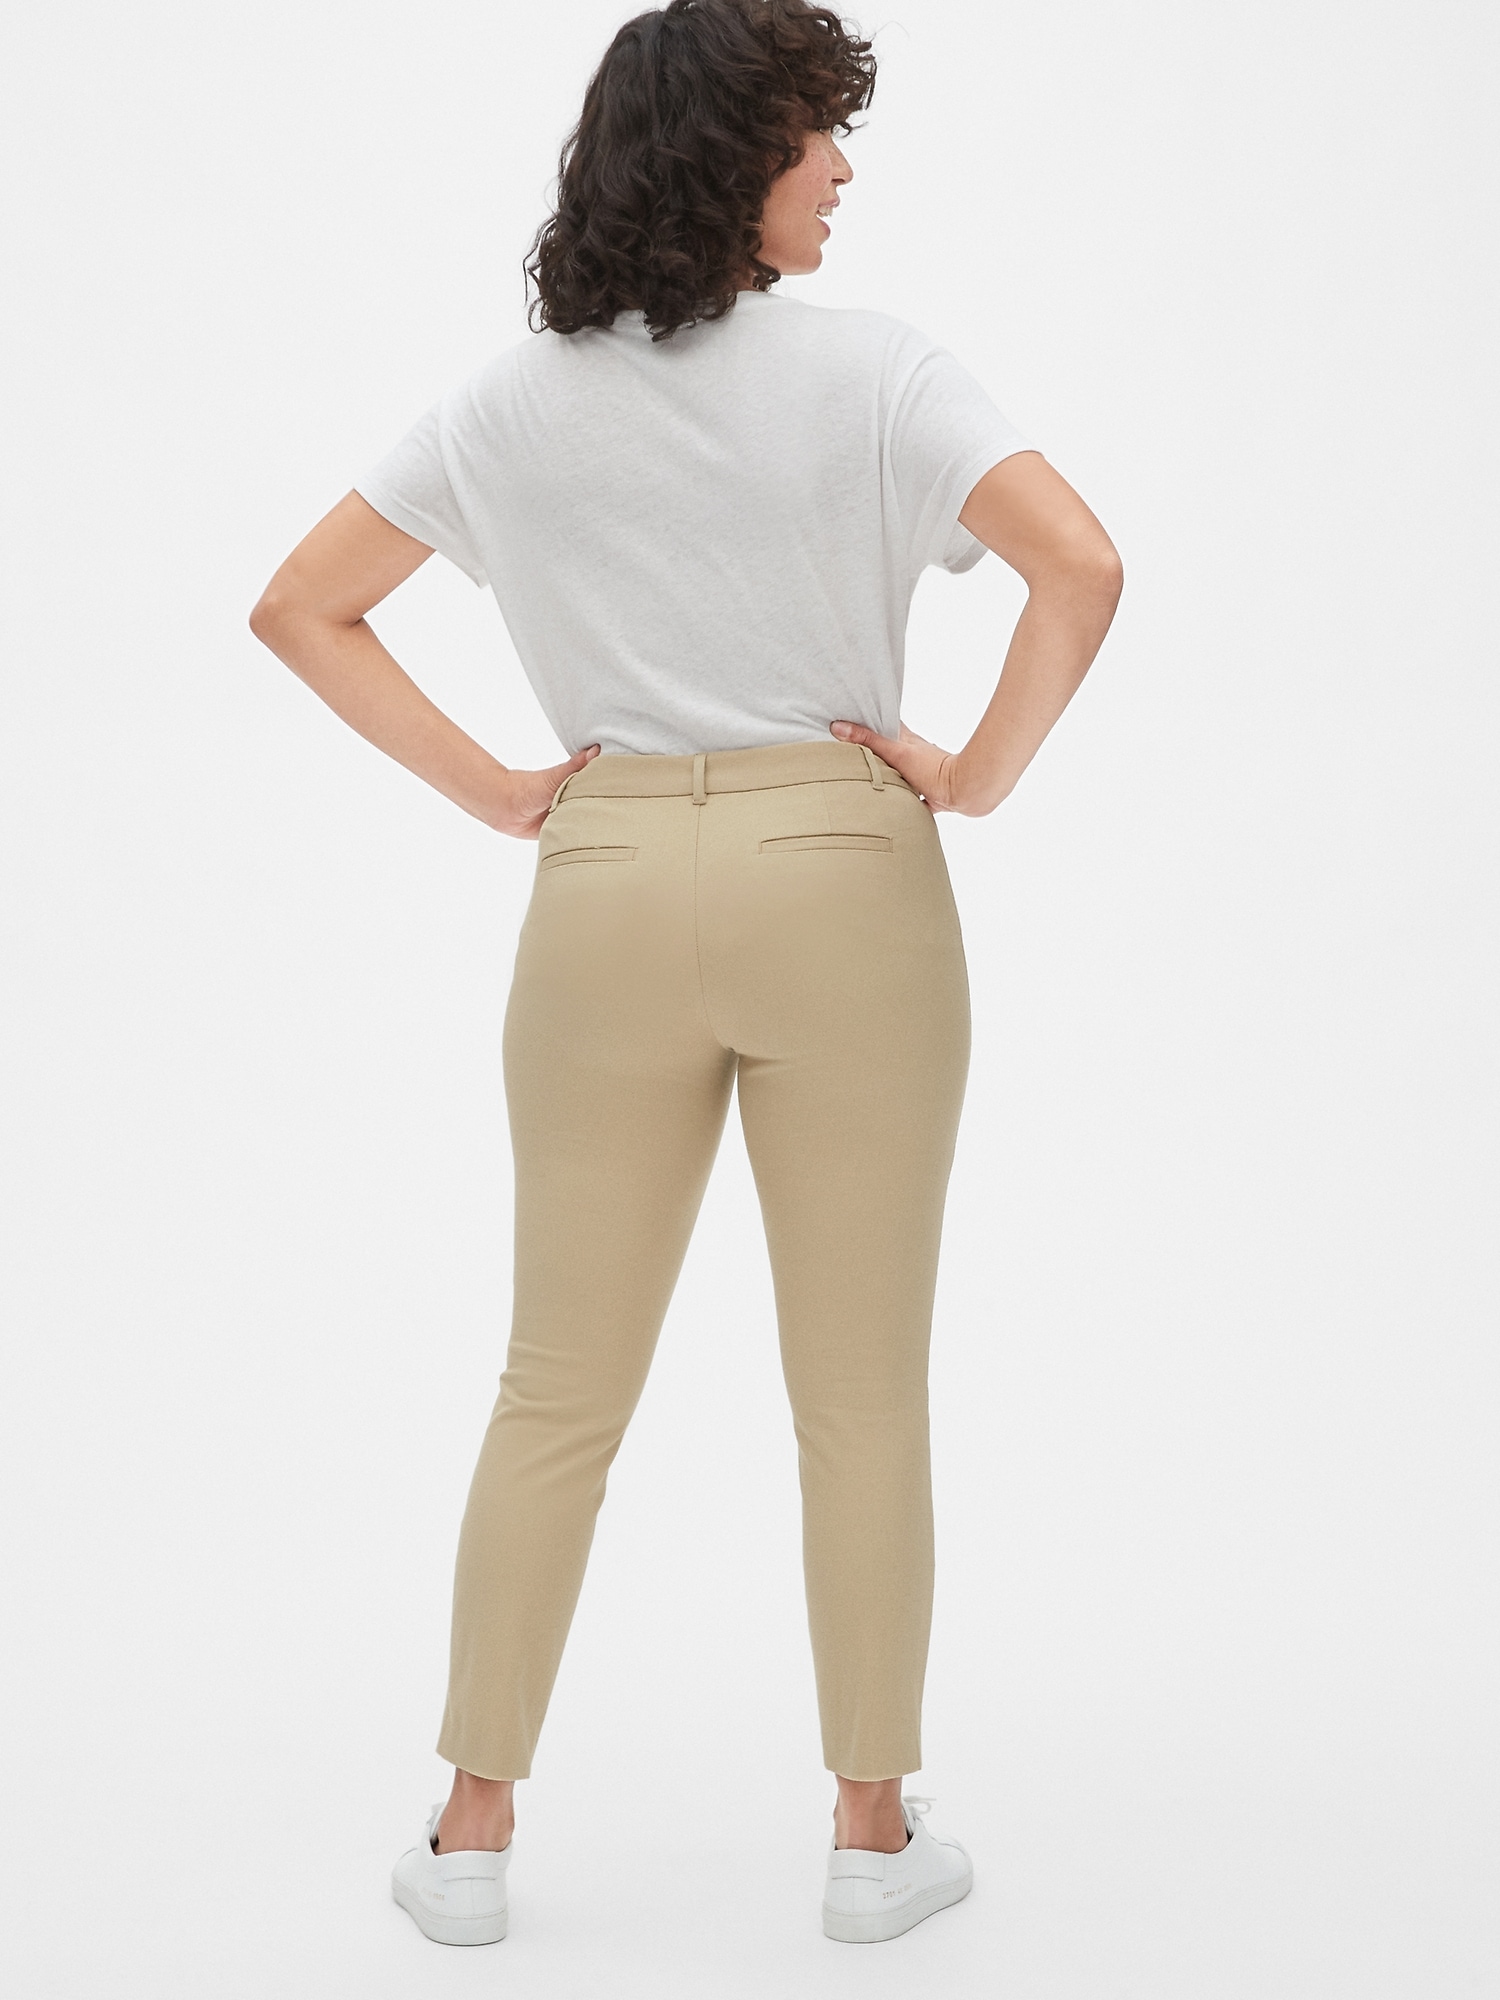 khaki skinny pants womens